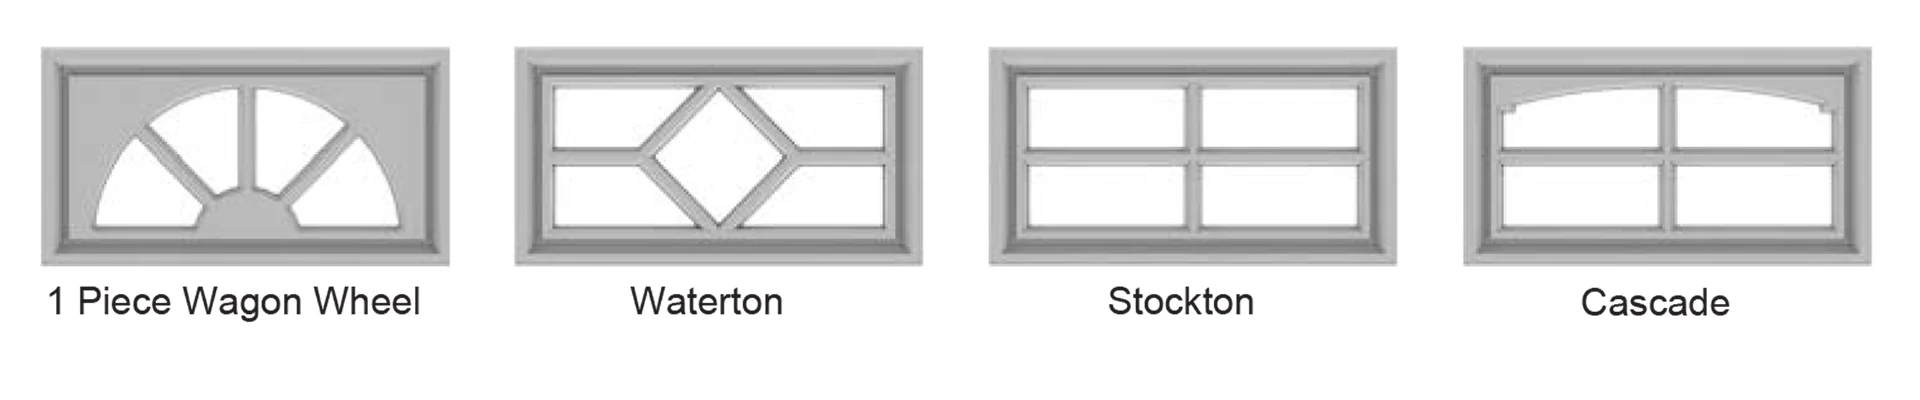 Elton Intermediate Panel 1 Piece Wagon Wheel, Waterton, Stockton, and Cascade design